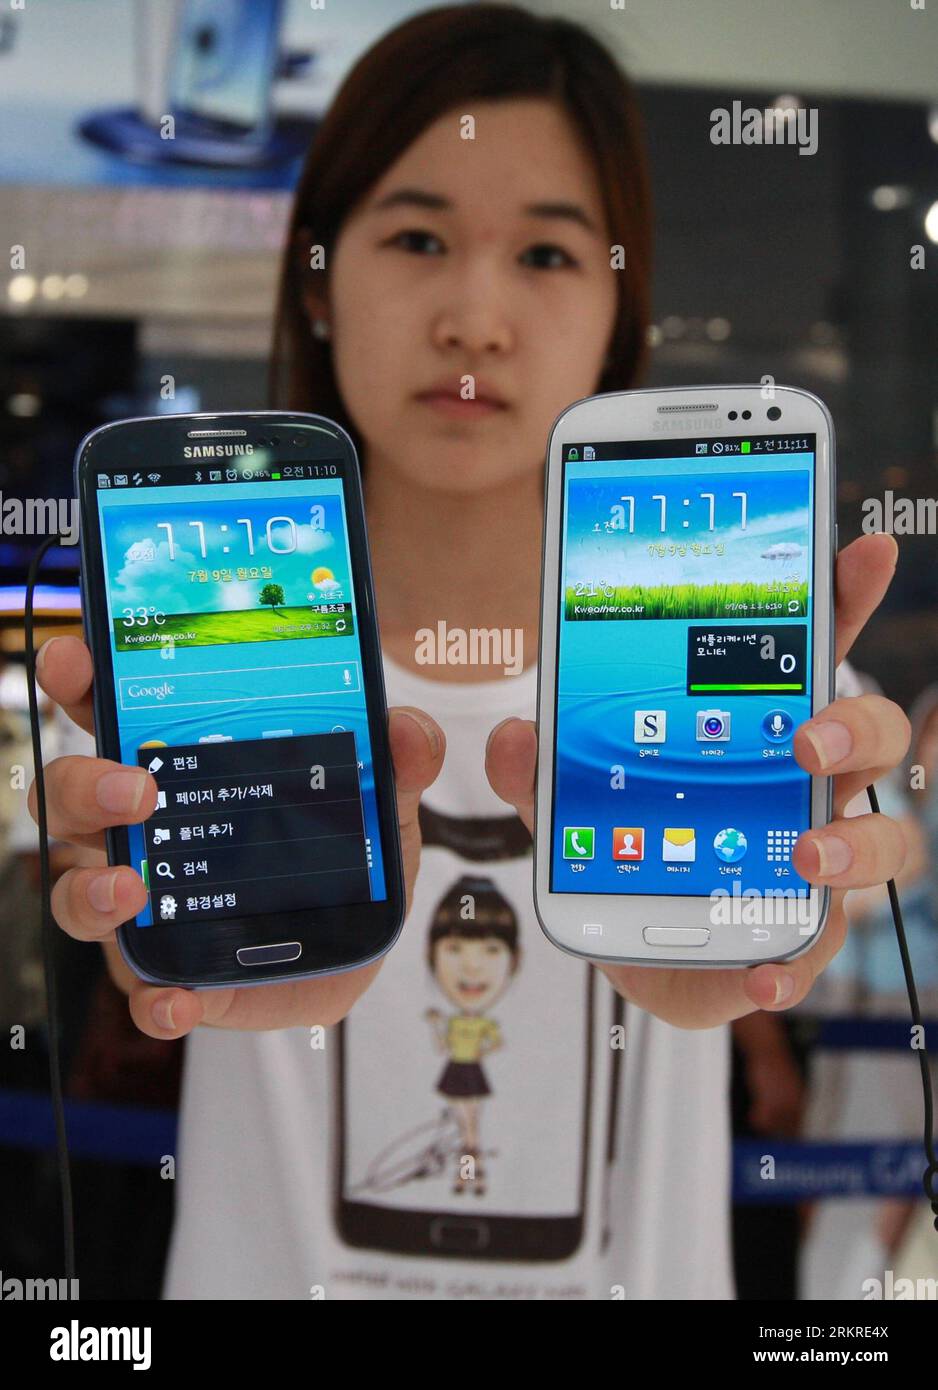 Bildnummer: 58212840  Datum: 09.07.2012  Copyright: imago/Xinhua (120709) -- SEOUL, July 9, 2012 (Xinhua) -- A shop assistant presents Samsung s new smartphone Galaxy S III in Seoul, South Korea, July 9, 2012. The smartphone went on sale on Monday. (Xinhua/Park Jin-hee) SOUTH KOREA-SEOUL-SAMSUNG-GALLAXY S III PUBLICATIONxNOTxINxCHN Wirtschaft Verkaufsstart Smartphone S 3 S3 xjh x0x premiumd Highlight 2012 hoch     58212840 Date 09 07 2012 Copyright Imago XINHUA  Seoul July 9 2012 XINHUA a Shop Assistant Presents Samsung S New Smartphone Galaxy S III in Seoul South Korea July 9 2012 The Smartph Stock Photo